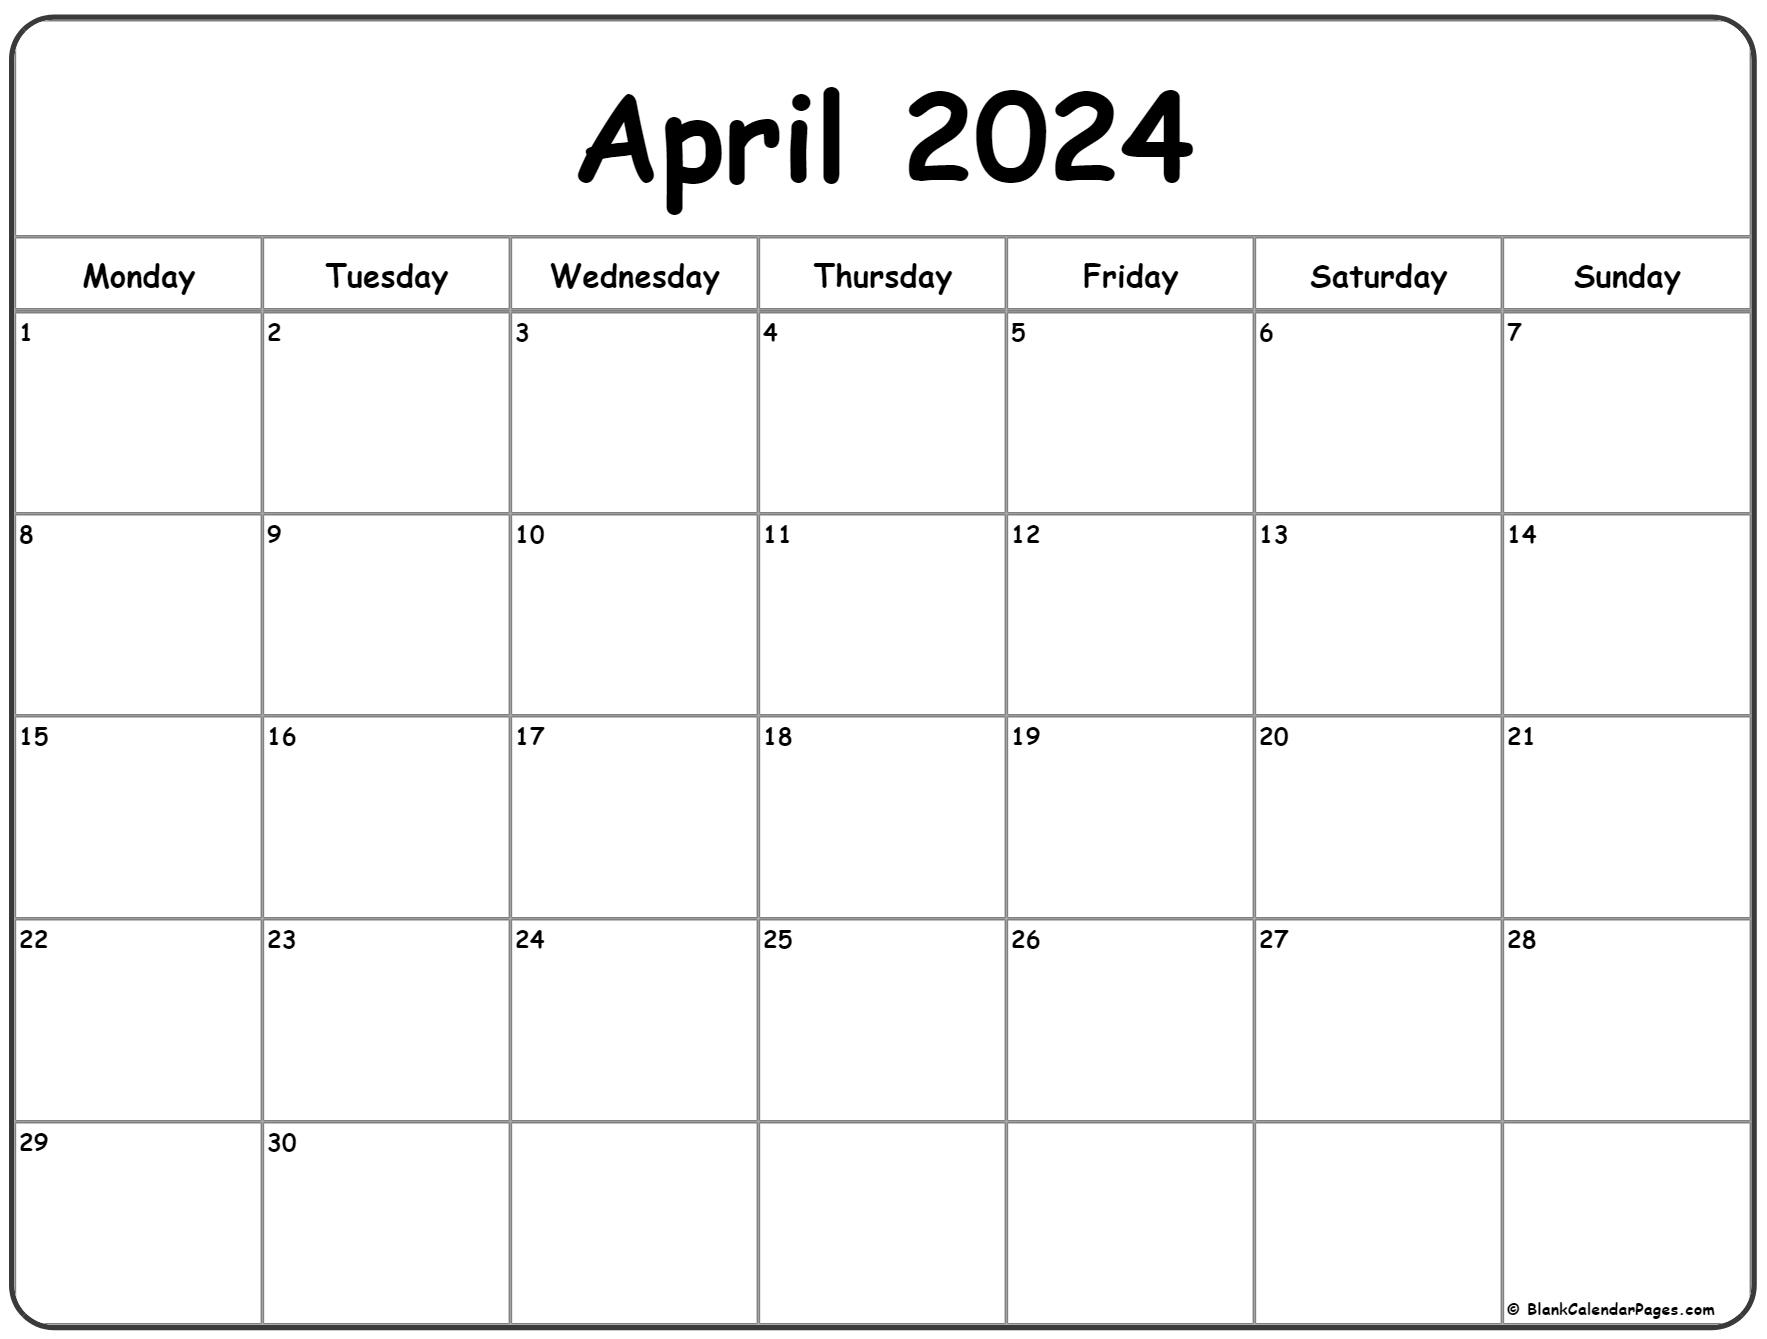 April 2024 Monday Calendar | Monday To Sunday for Blank Calendar Template April 2024 Printable